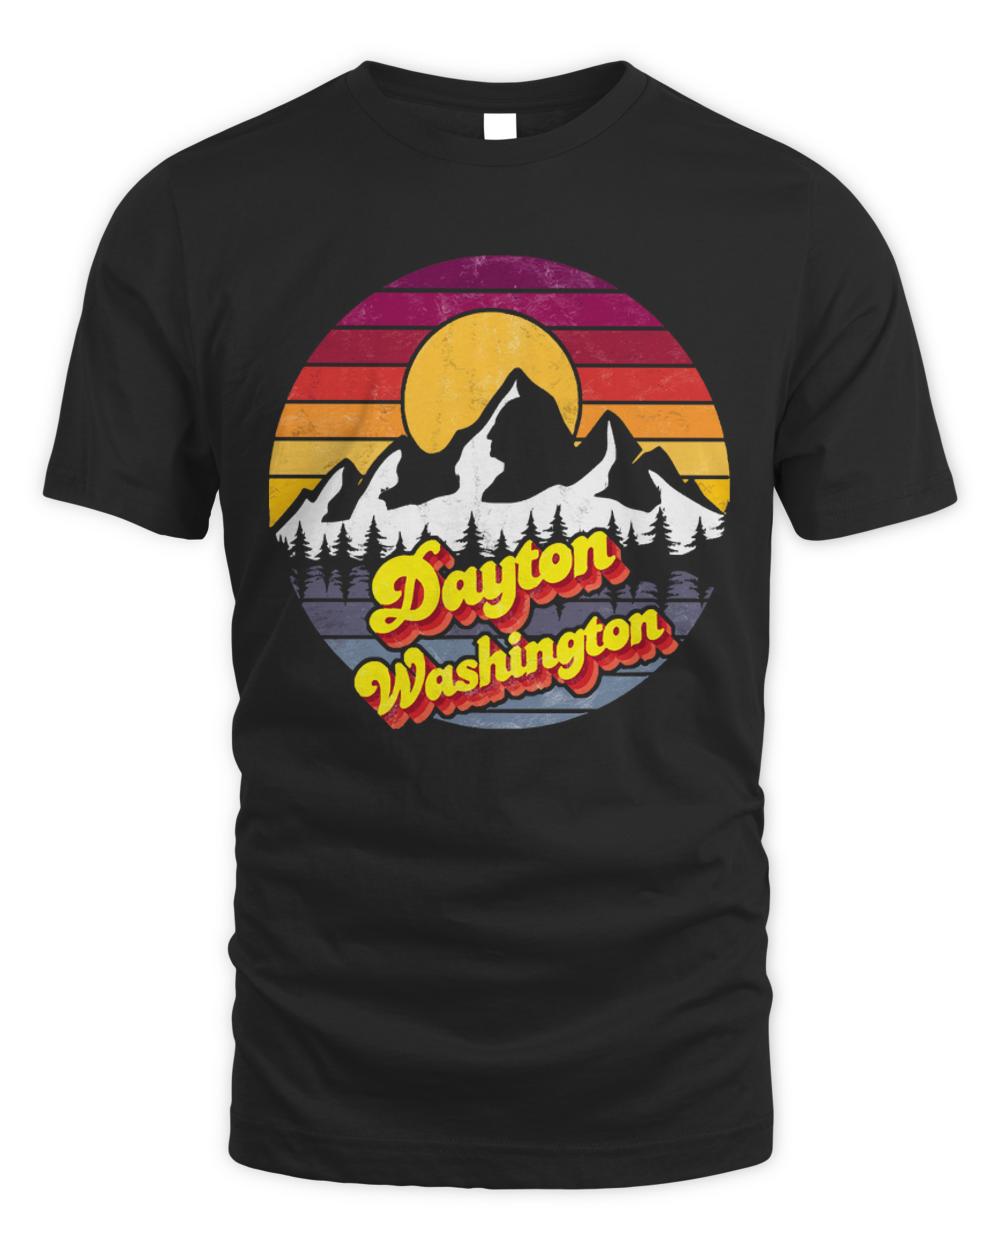 Dayton T- Shirt Dayton Washington T- Shirt